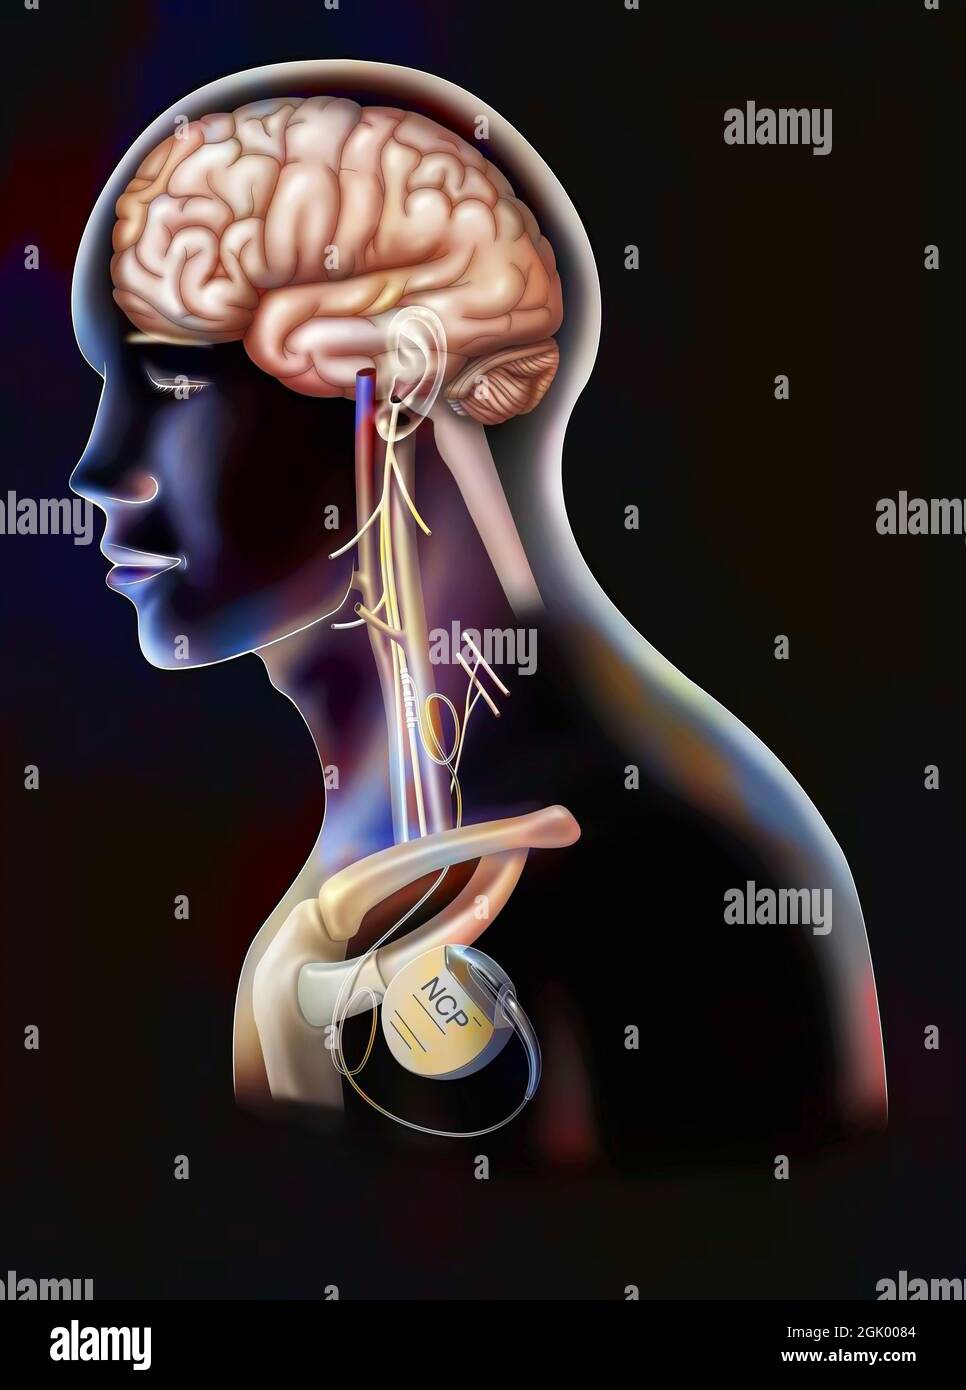 Treatment of epilepsy by stimulation of the vagus nerve with a neurostimulator box. Stock Photo